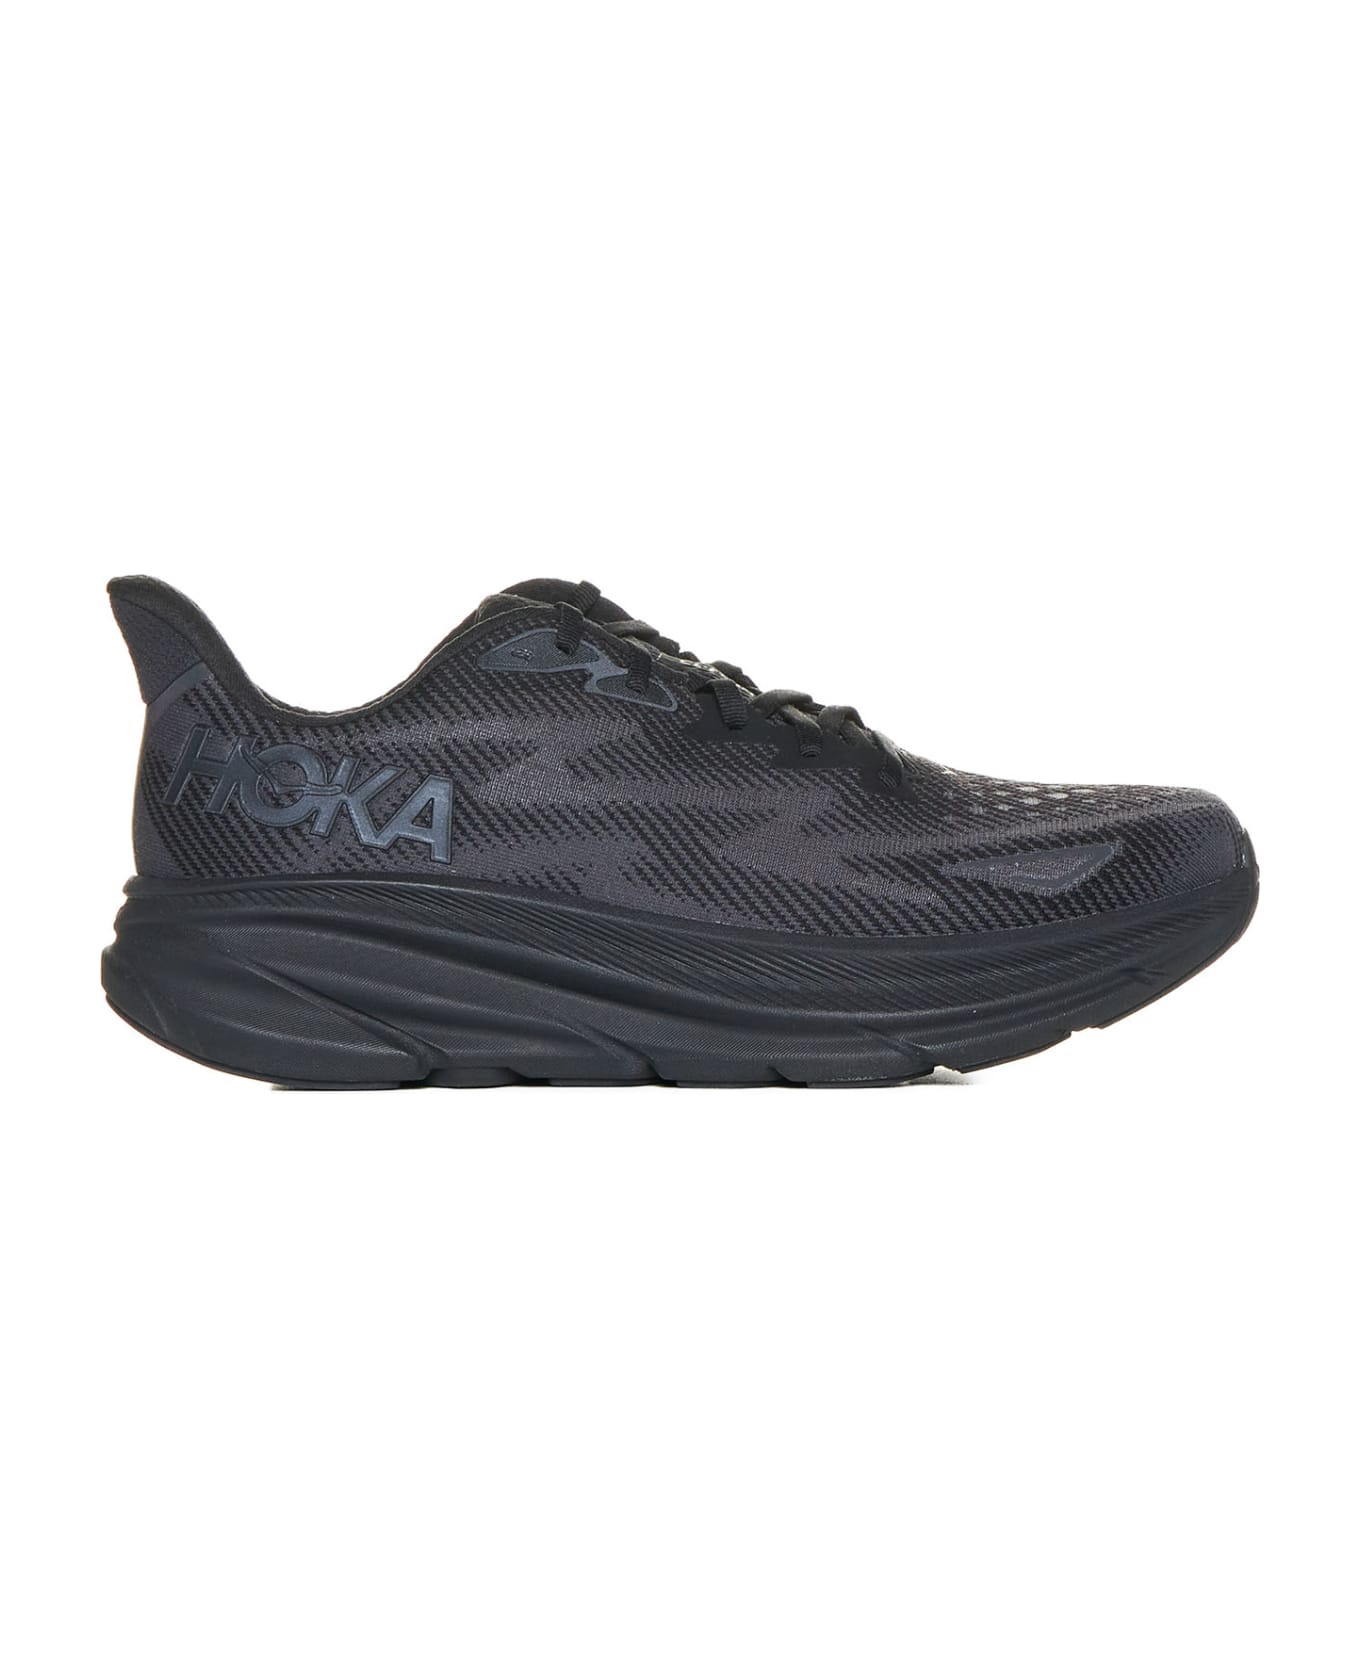 Hoka Sneakers - Black black スニーカー